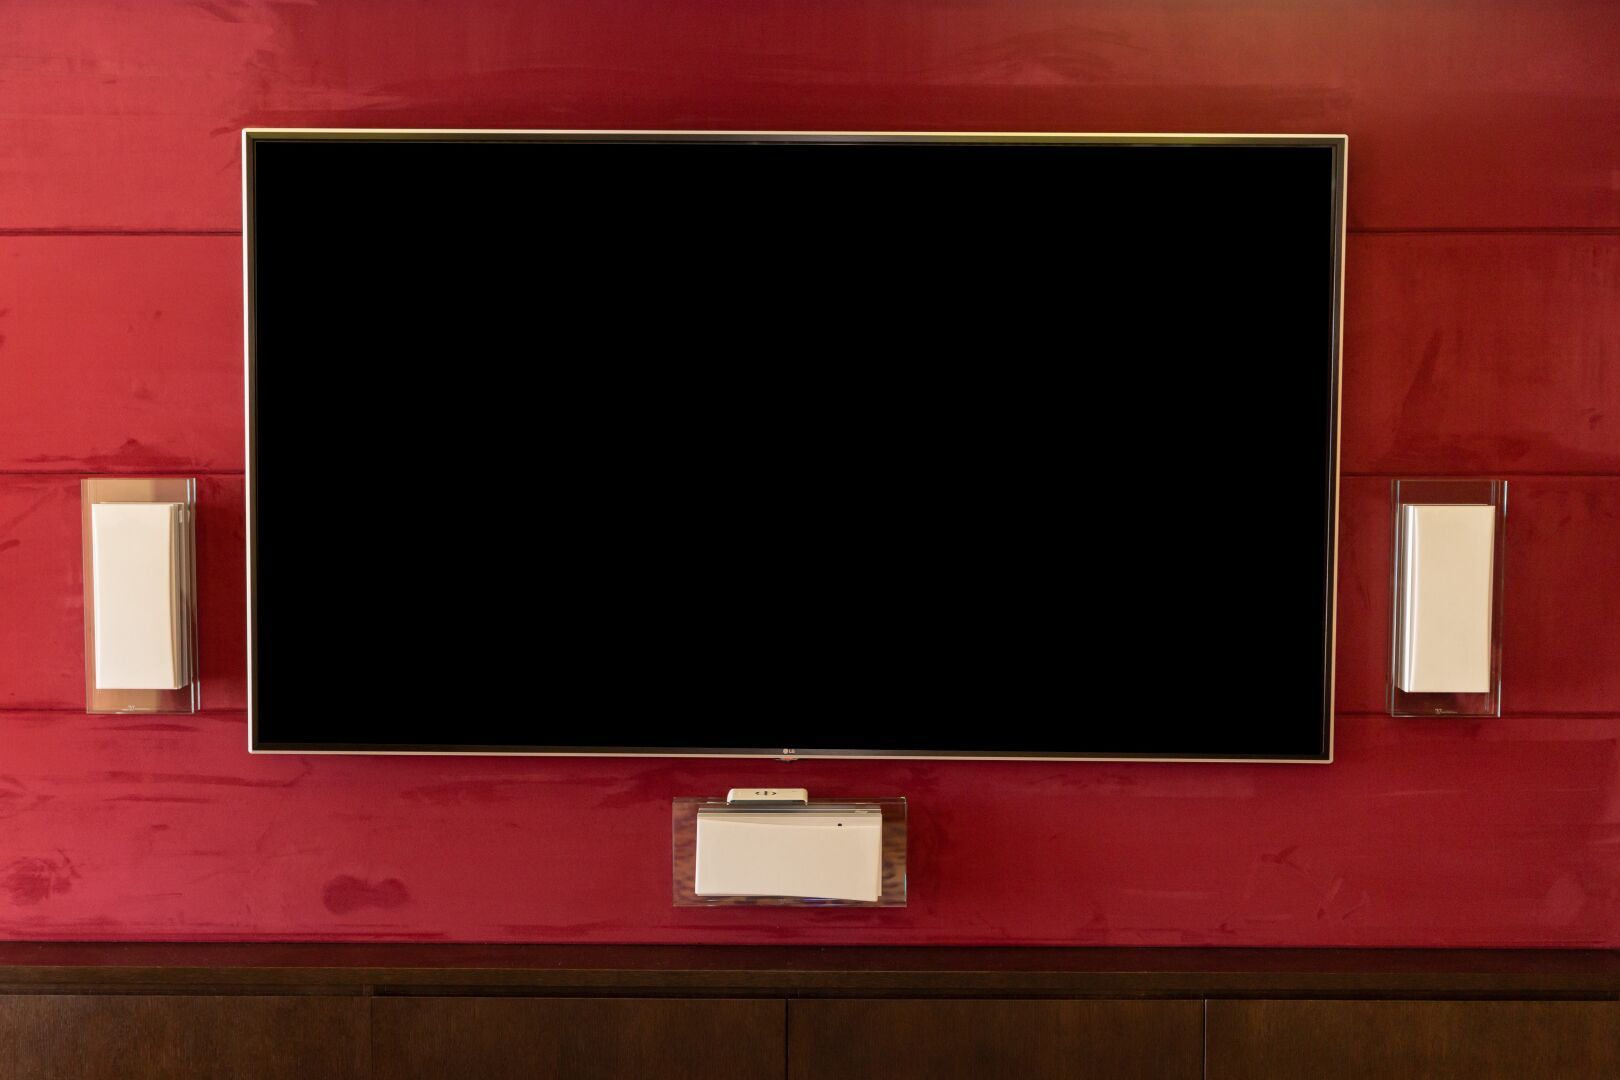 Null TV de pantalla plana grande LG 86SJ957V (86"), 217 cm.

Año 2017.

Supuesta&hellip;